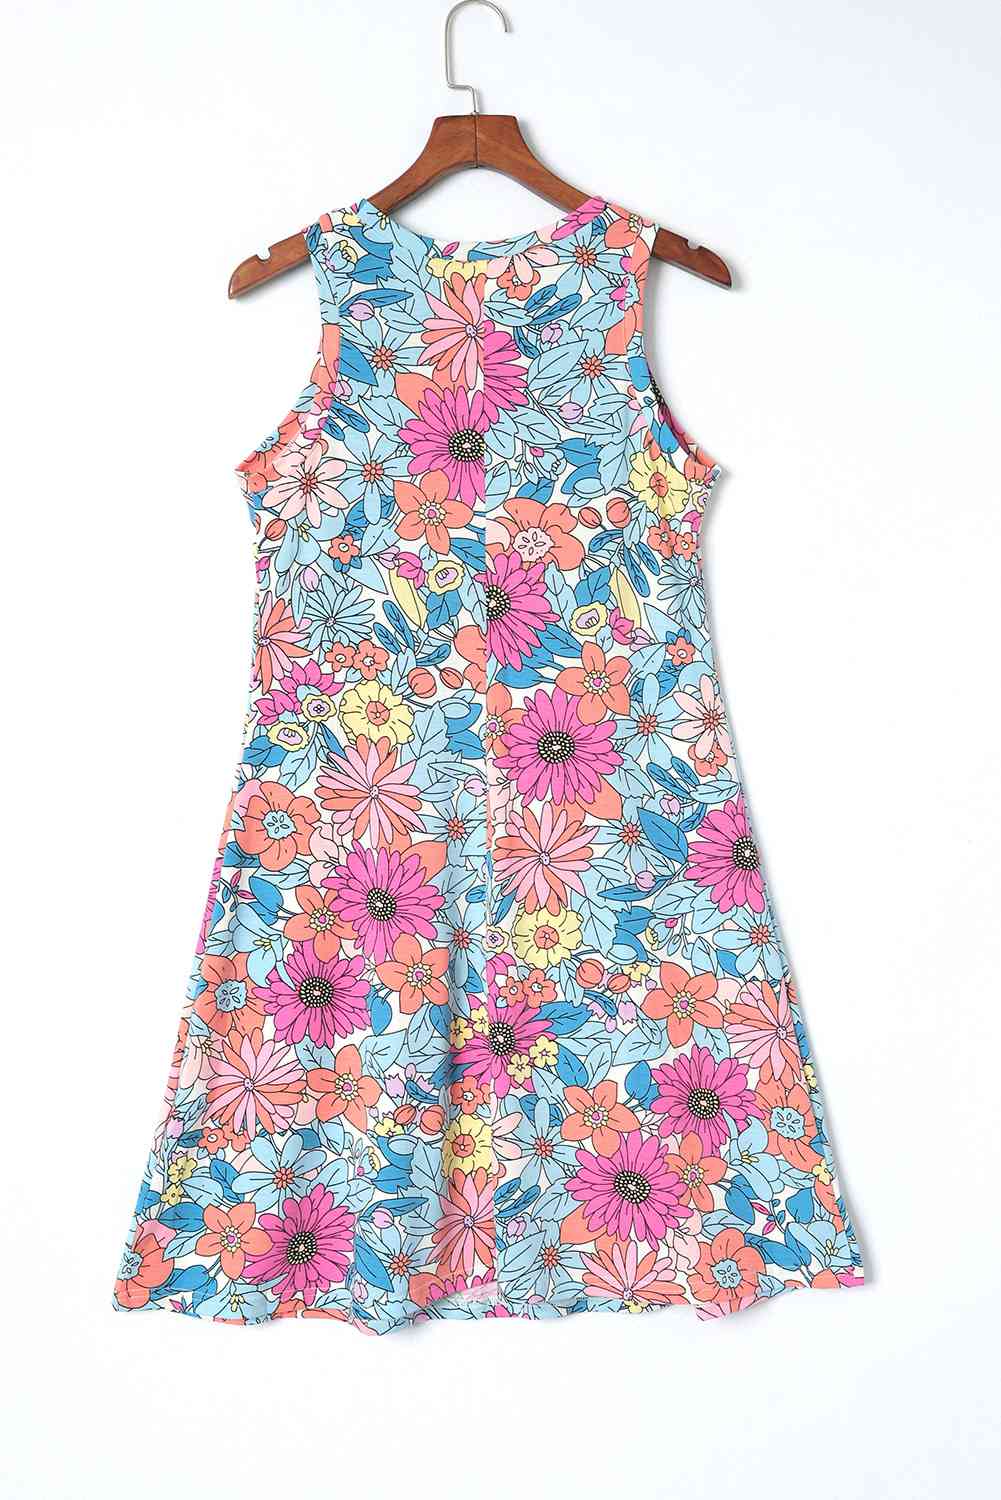 The802Gypsy Dresses Gypsy-Floral Round Neck Sleeveless Dress